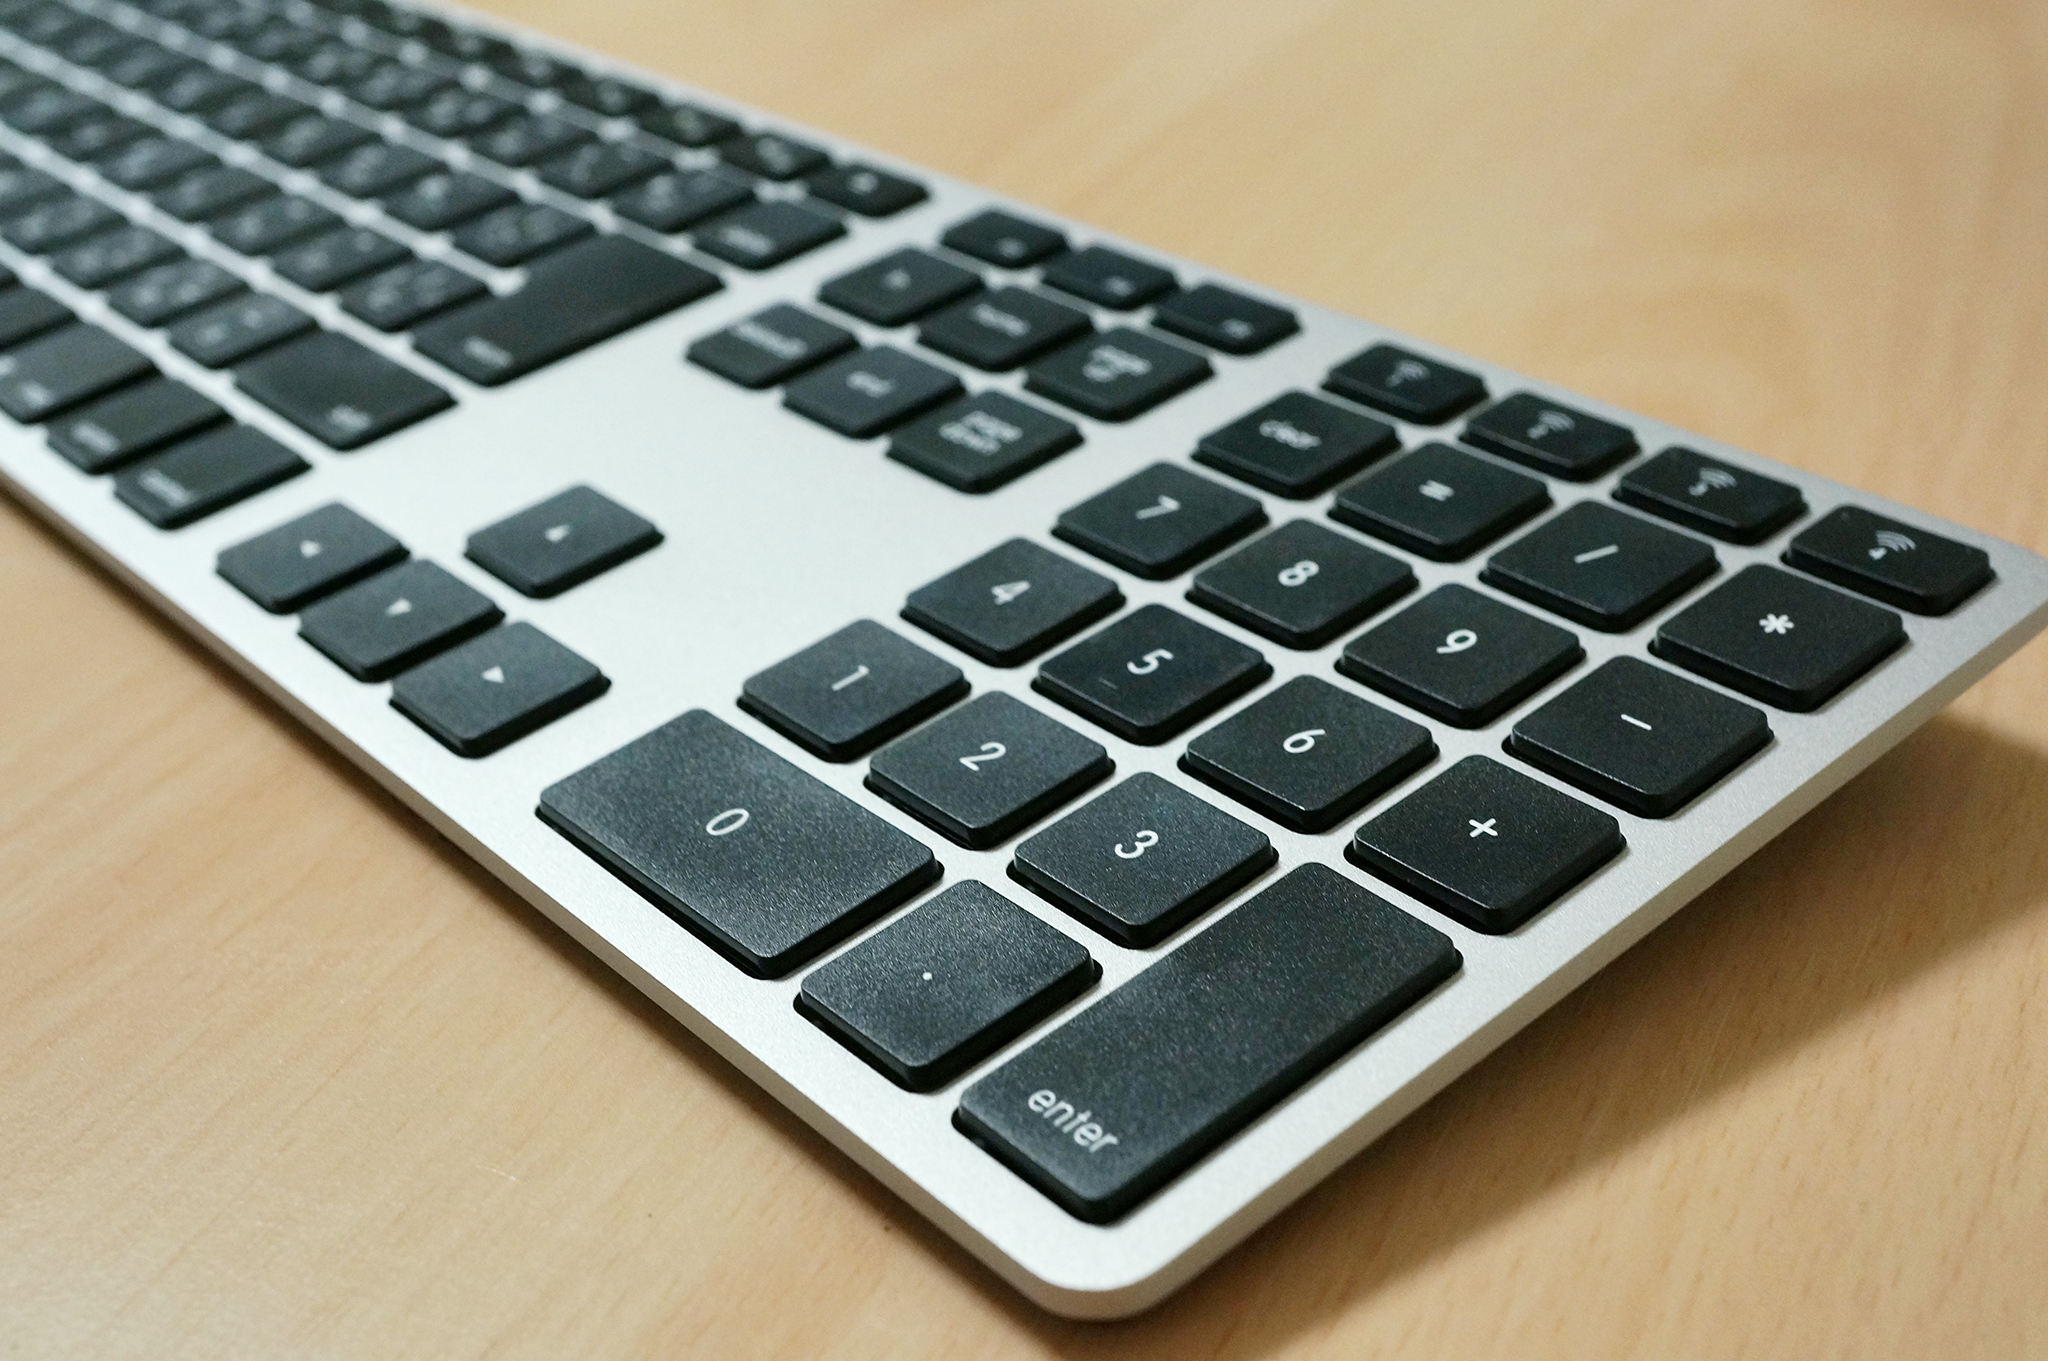 Matias Wireless Aluminum Keyboard レビュー まるでmacbook Mac用bluetoothフルキーボード Makkyon Web